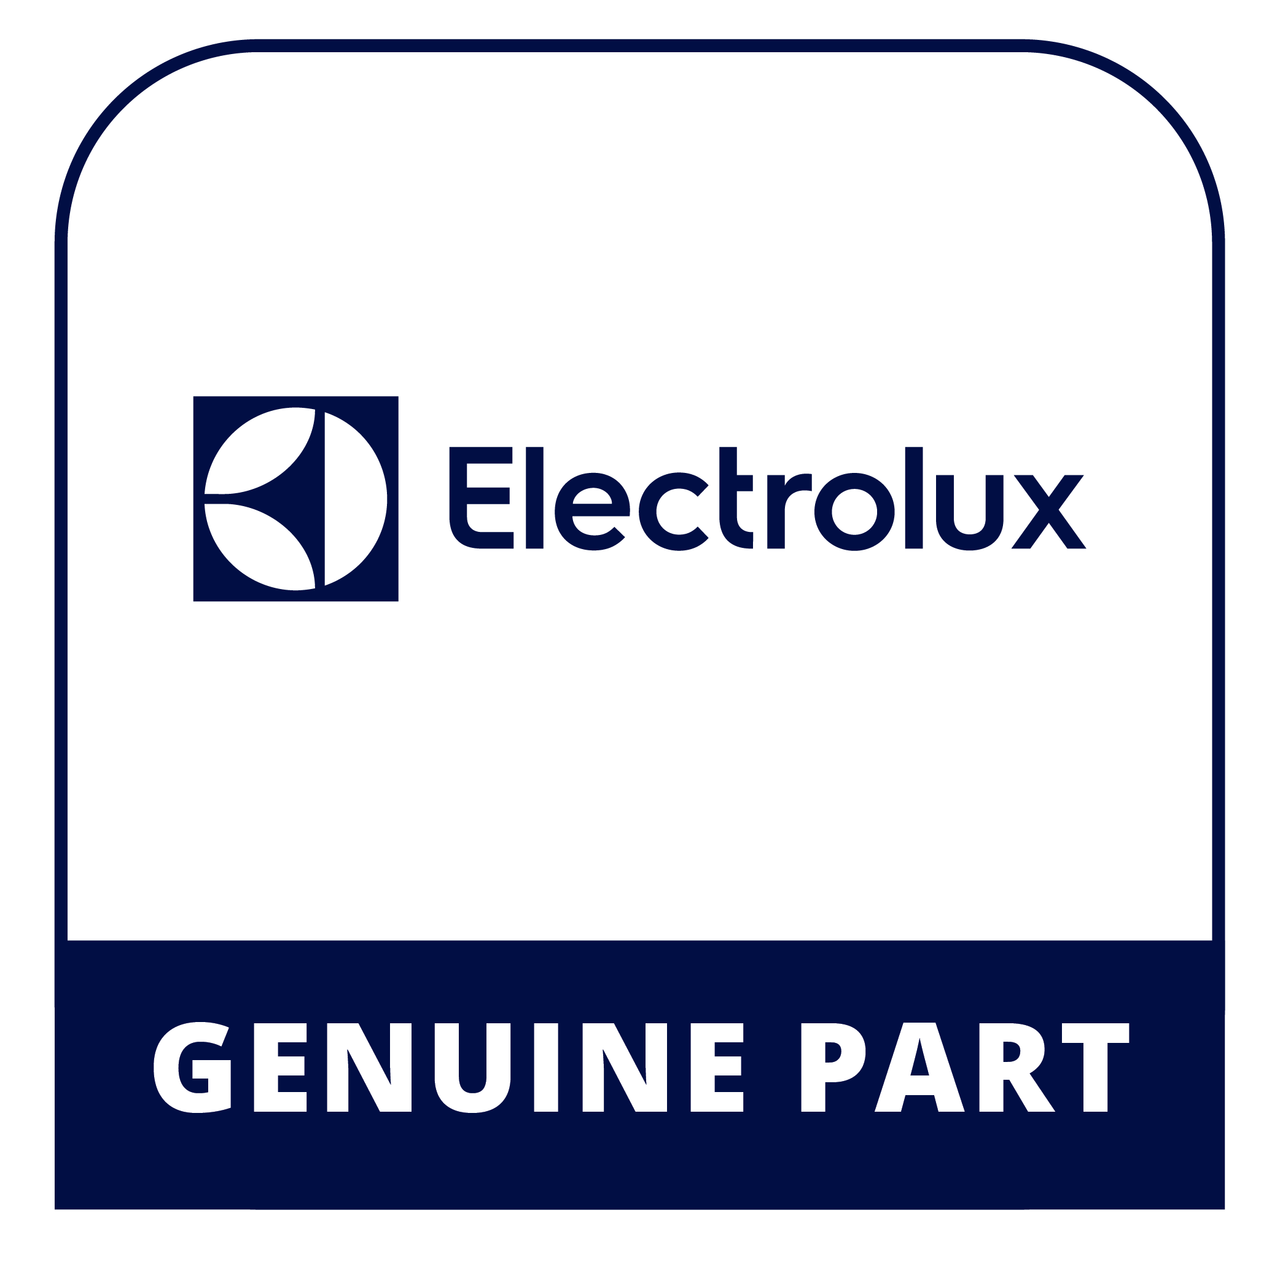 Frigidaire - Electrolux 297403901 Breaker - Genuine Electrolux Part